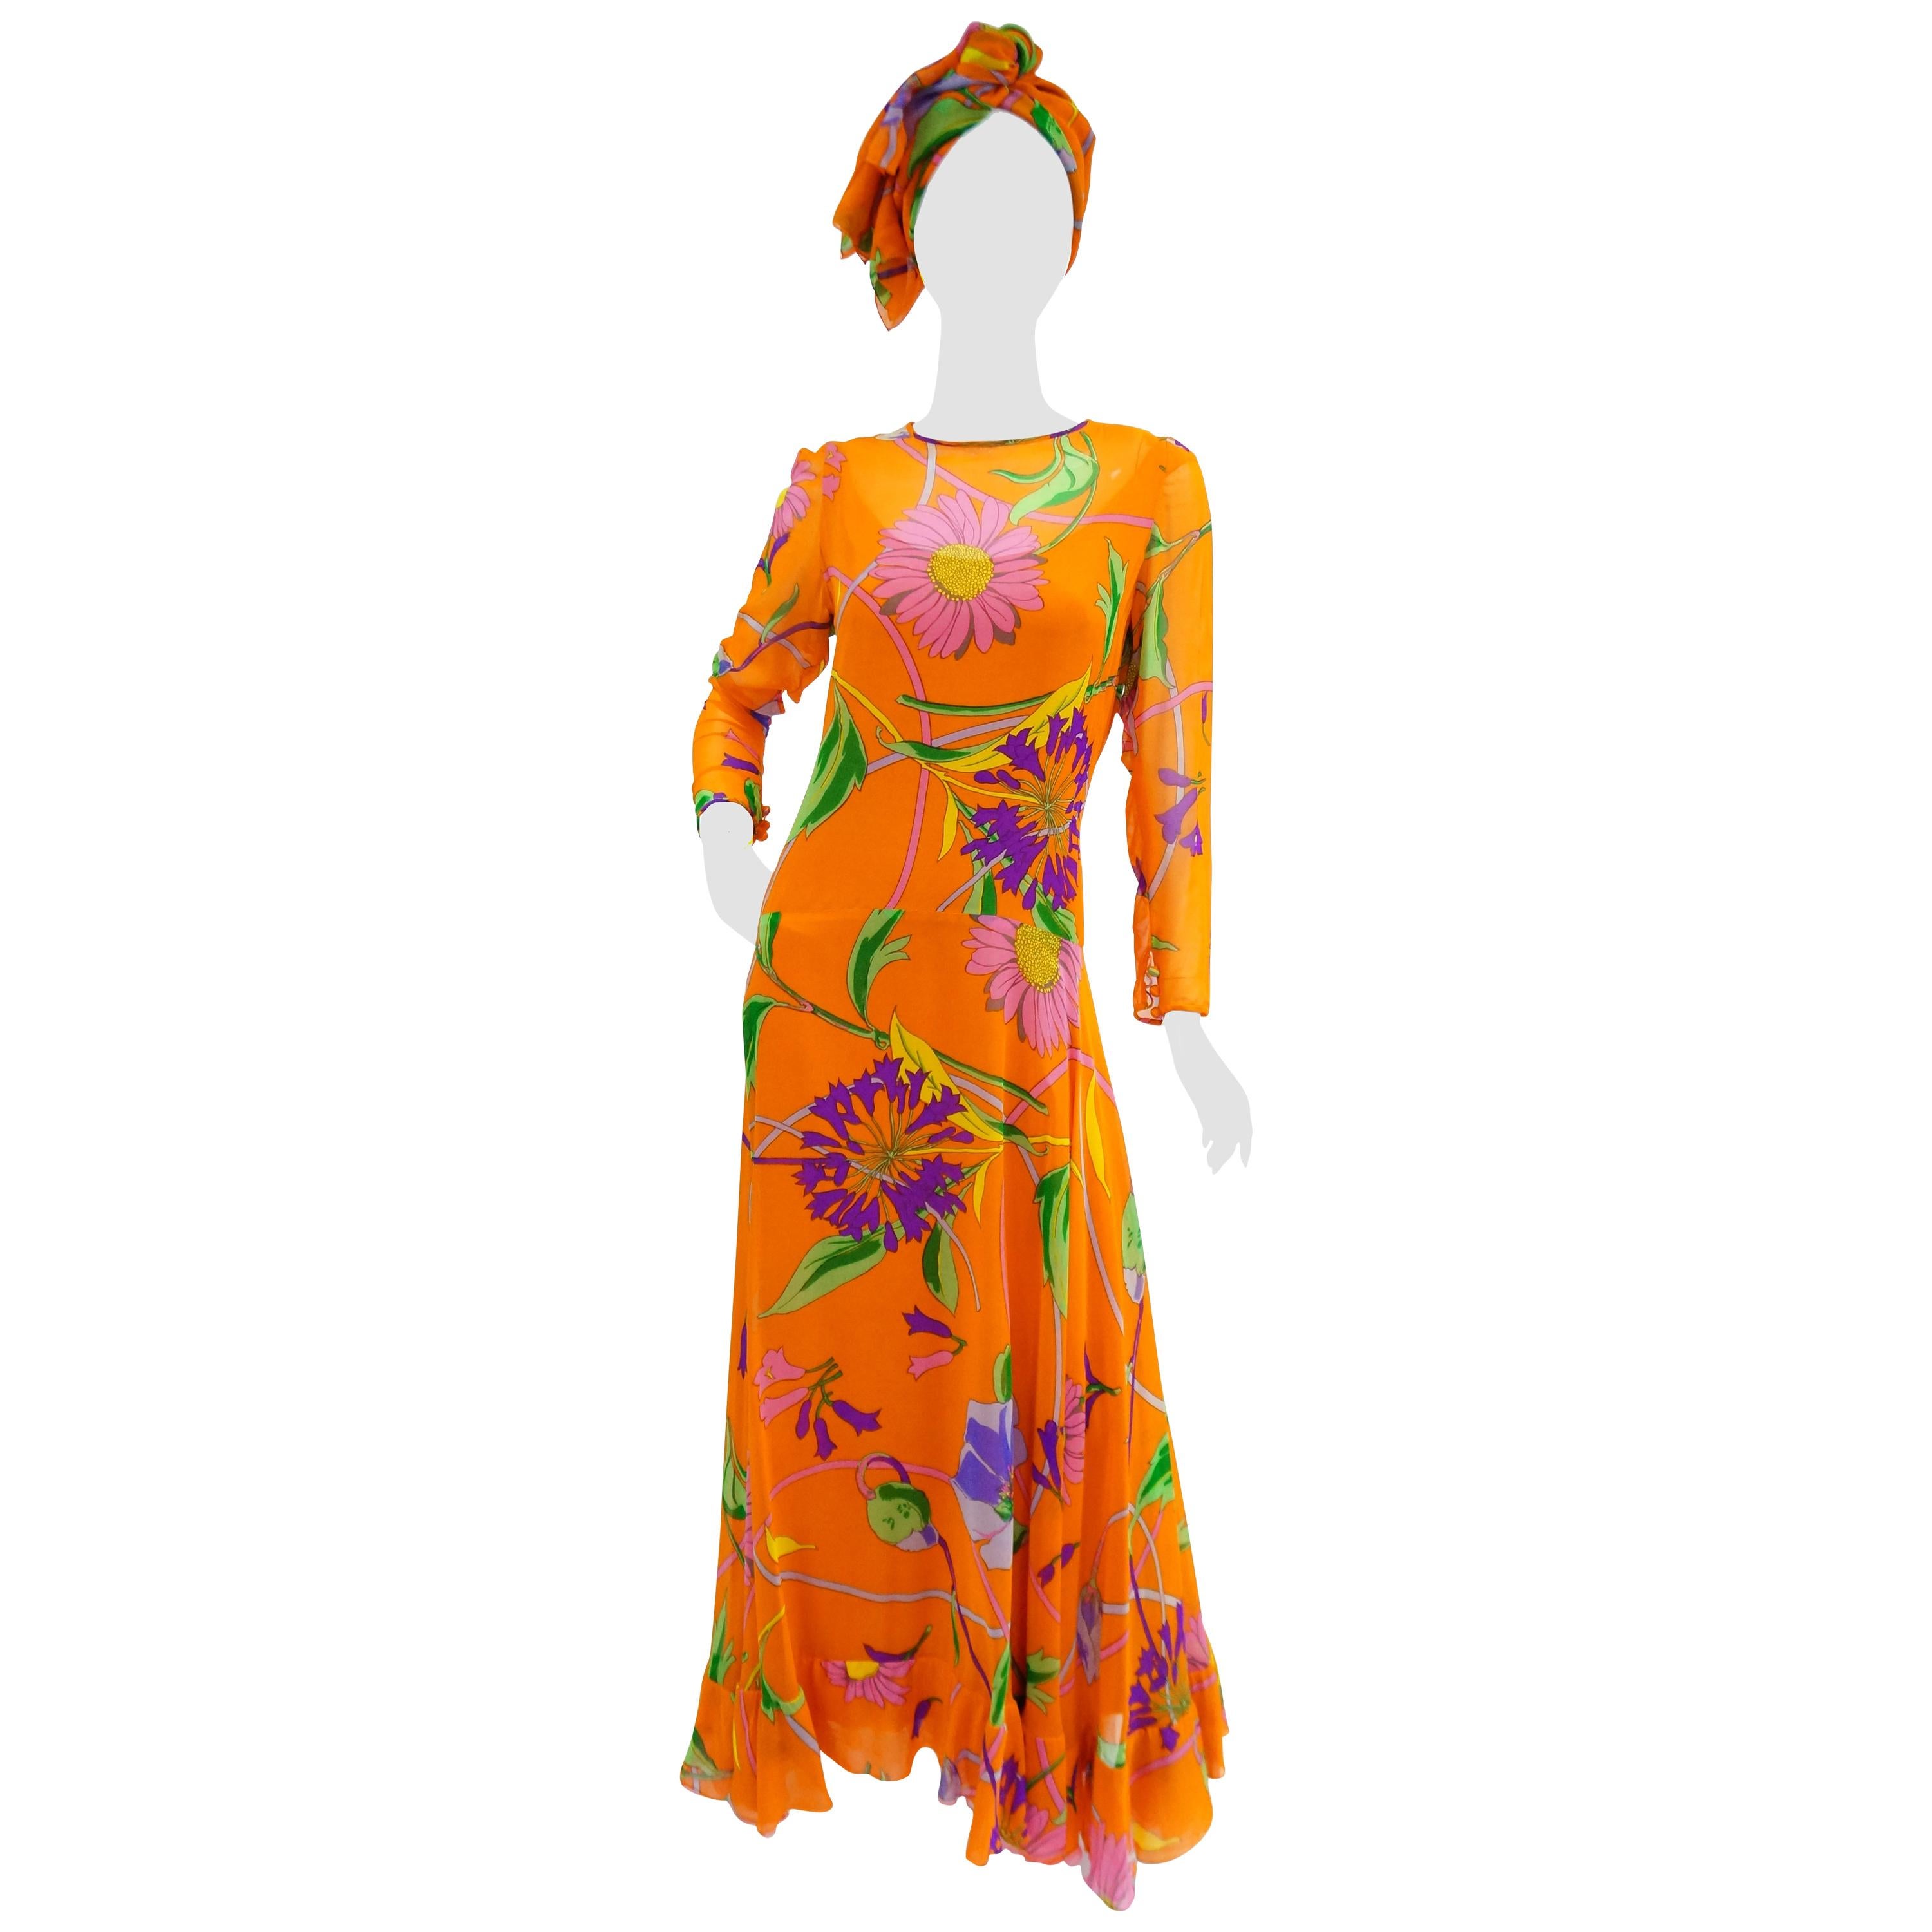 1930s Spring Floral Print Silk Chiffon Tea Dress For Sale At 1stdibs 